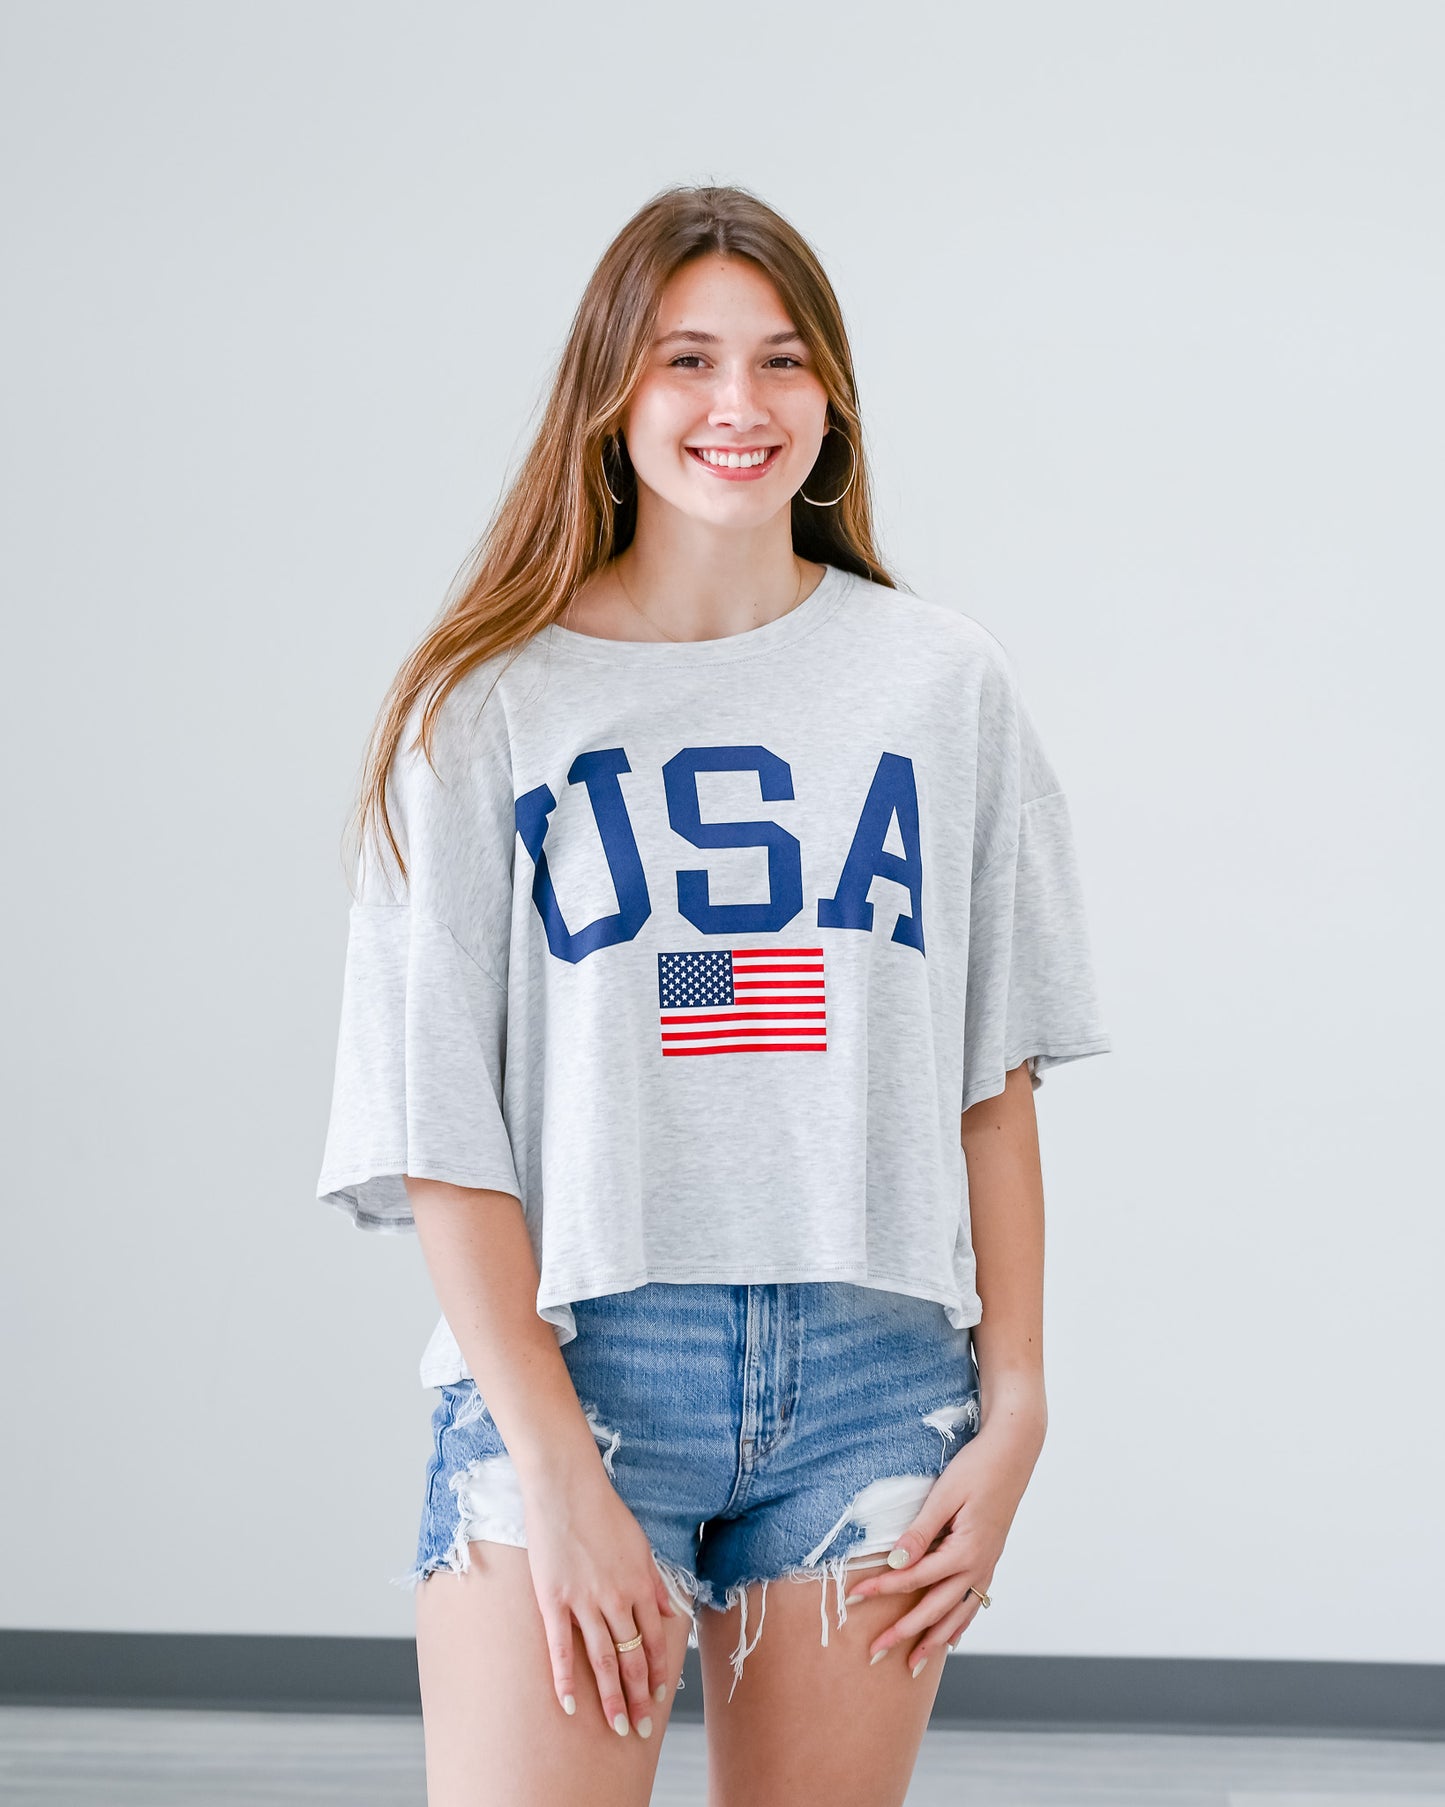 "USA" Short Sleeve Graphic Tee